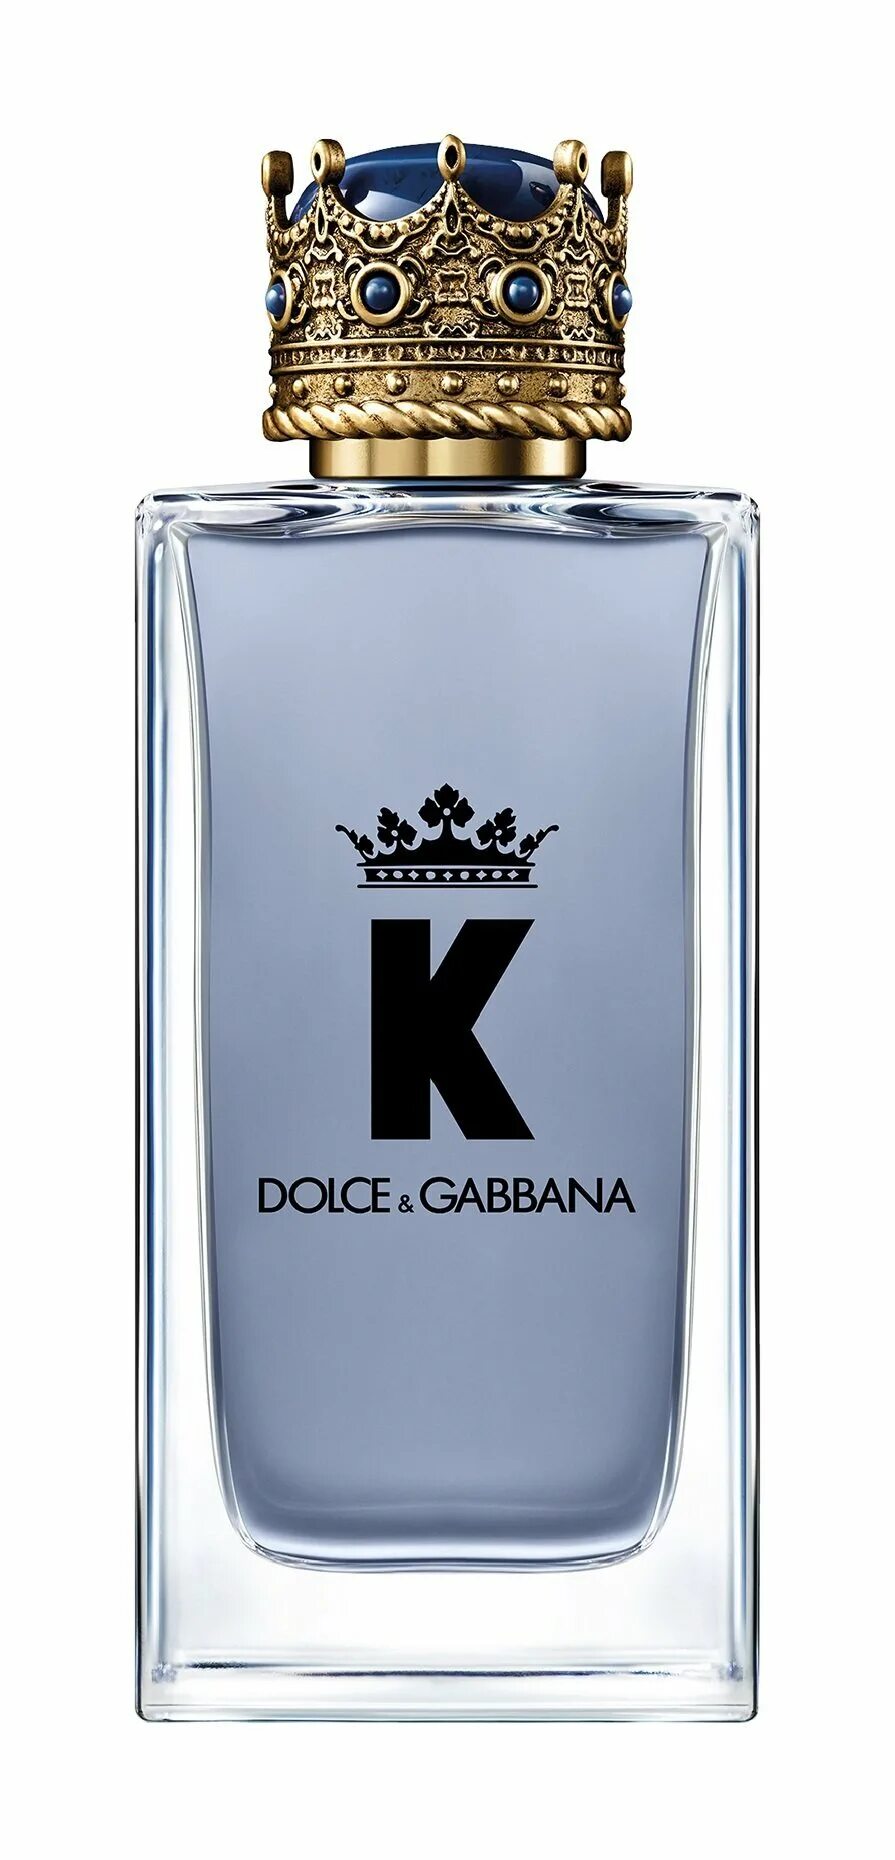 Dolce gabbana вода k. Dolce & Gabbana by k EDP, 100 ml. •Dolce&Gabbana k EDT 100ml. Dolce Gabbana k King 100ml EDT. Dolce Gabbana King 100ml.